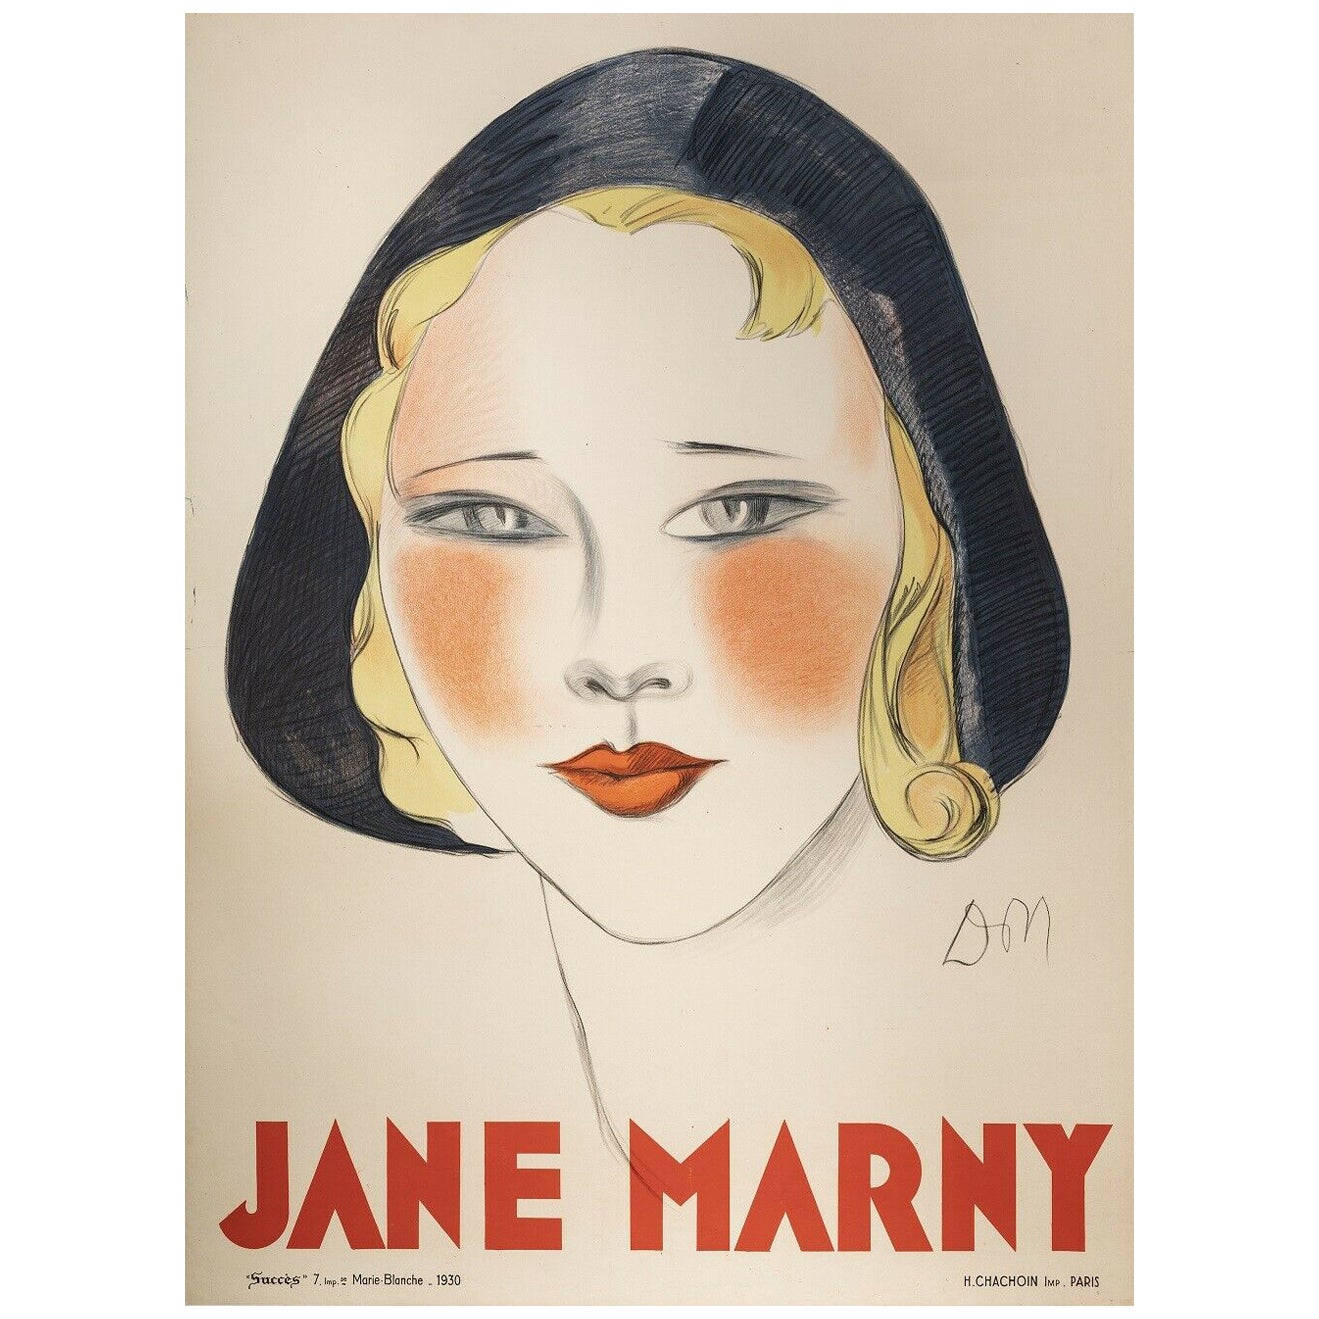 Original Art Deco Poster-Jean Don-Jane Marny-Actress -France, 1930